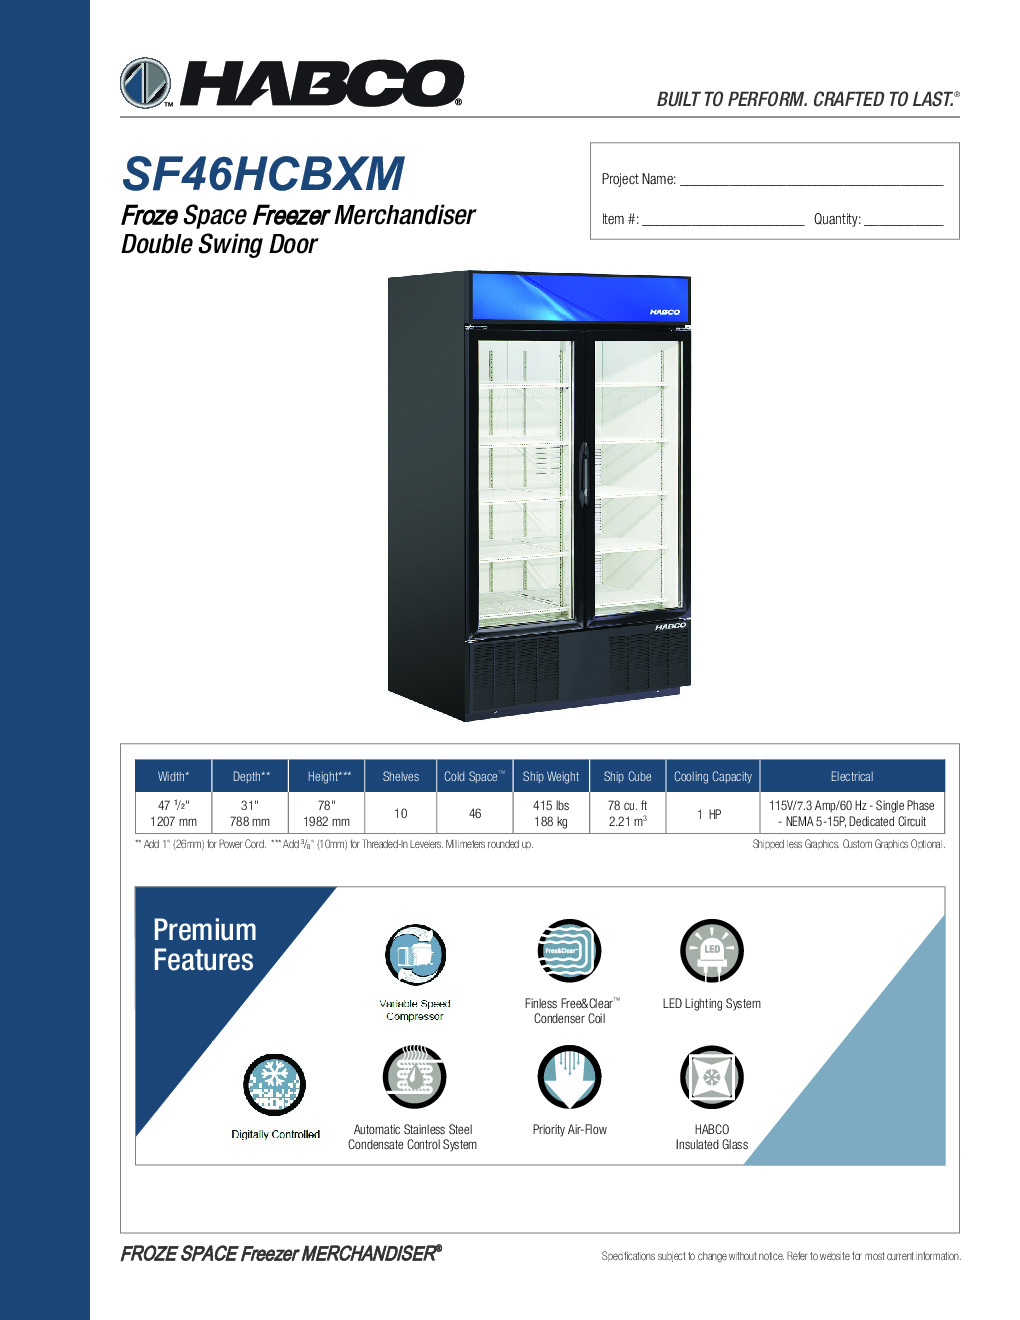 HABCO SF46HCBXM Merchandiser Freezer